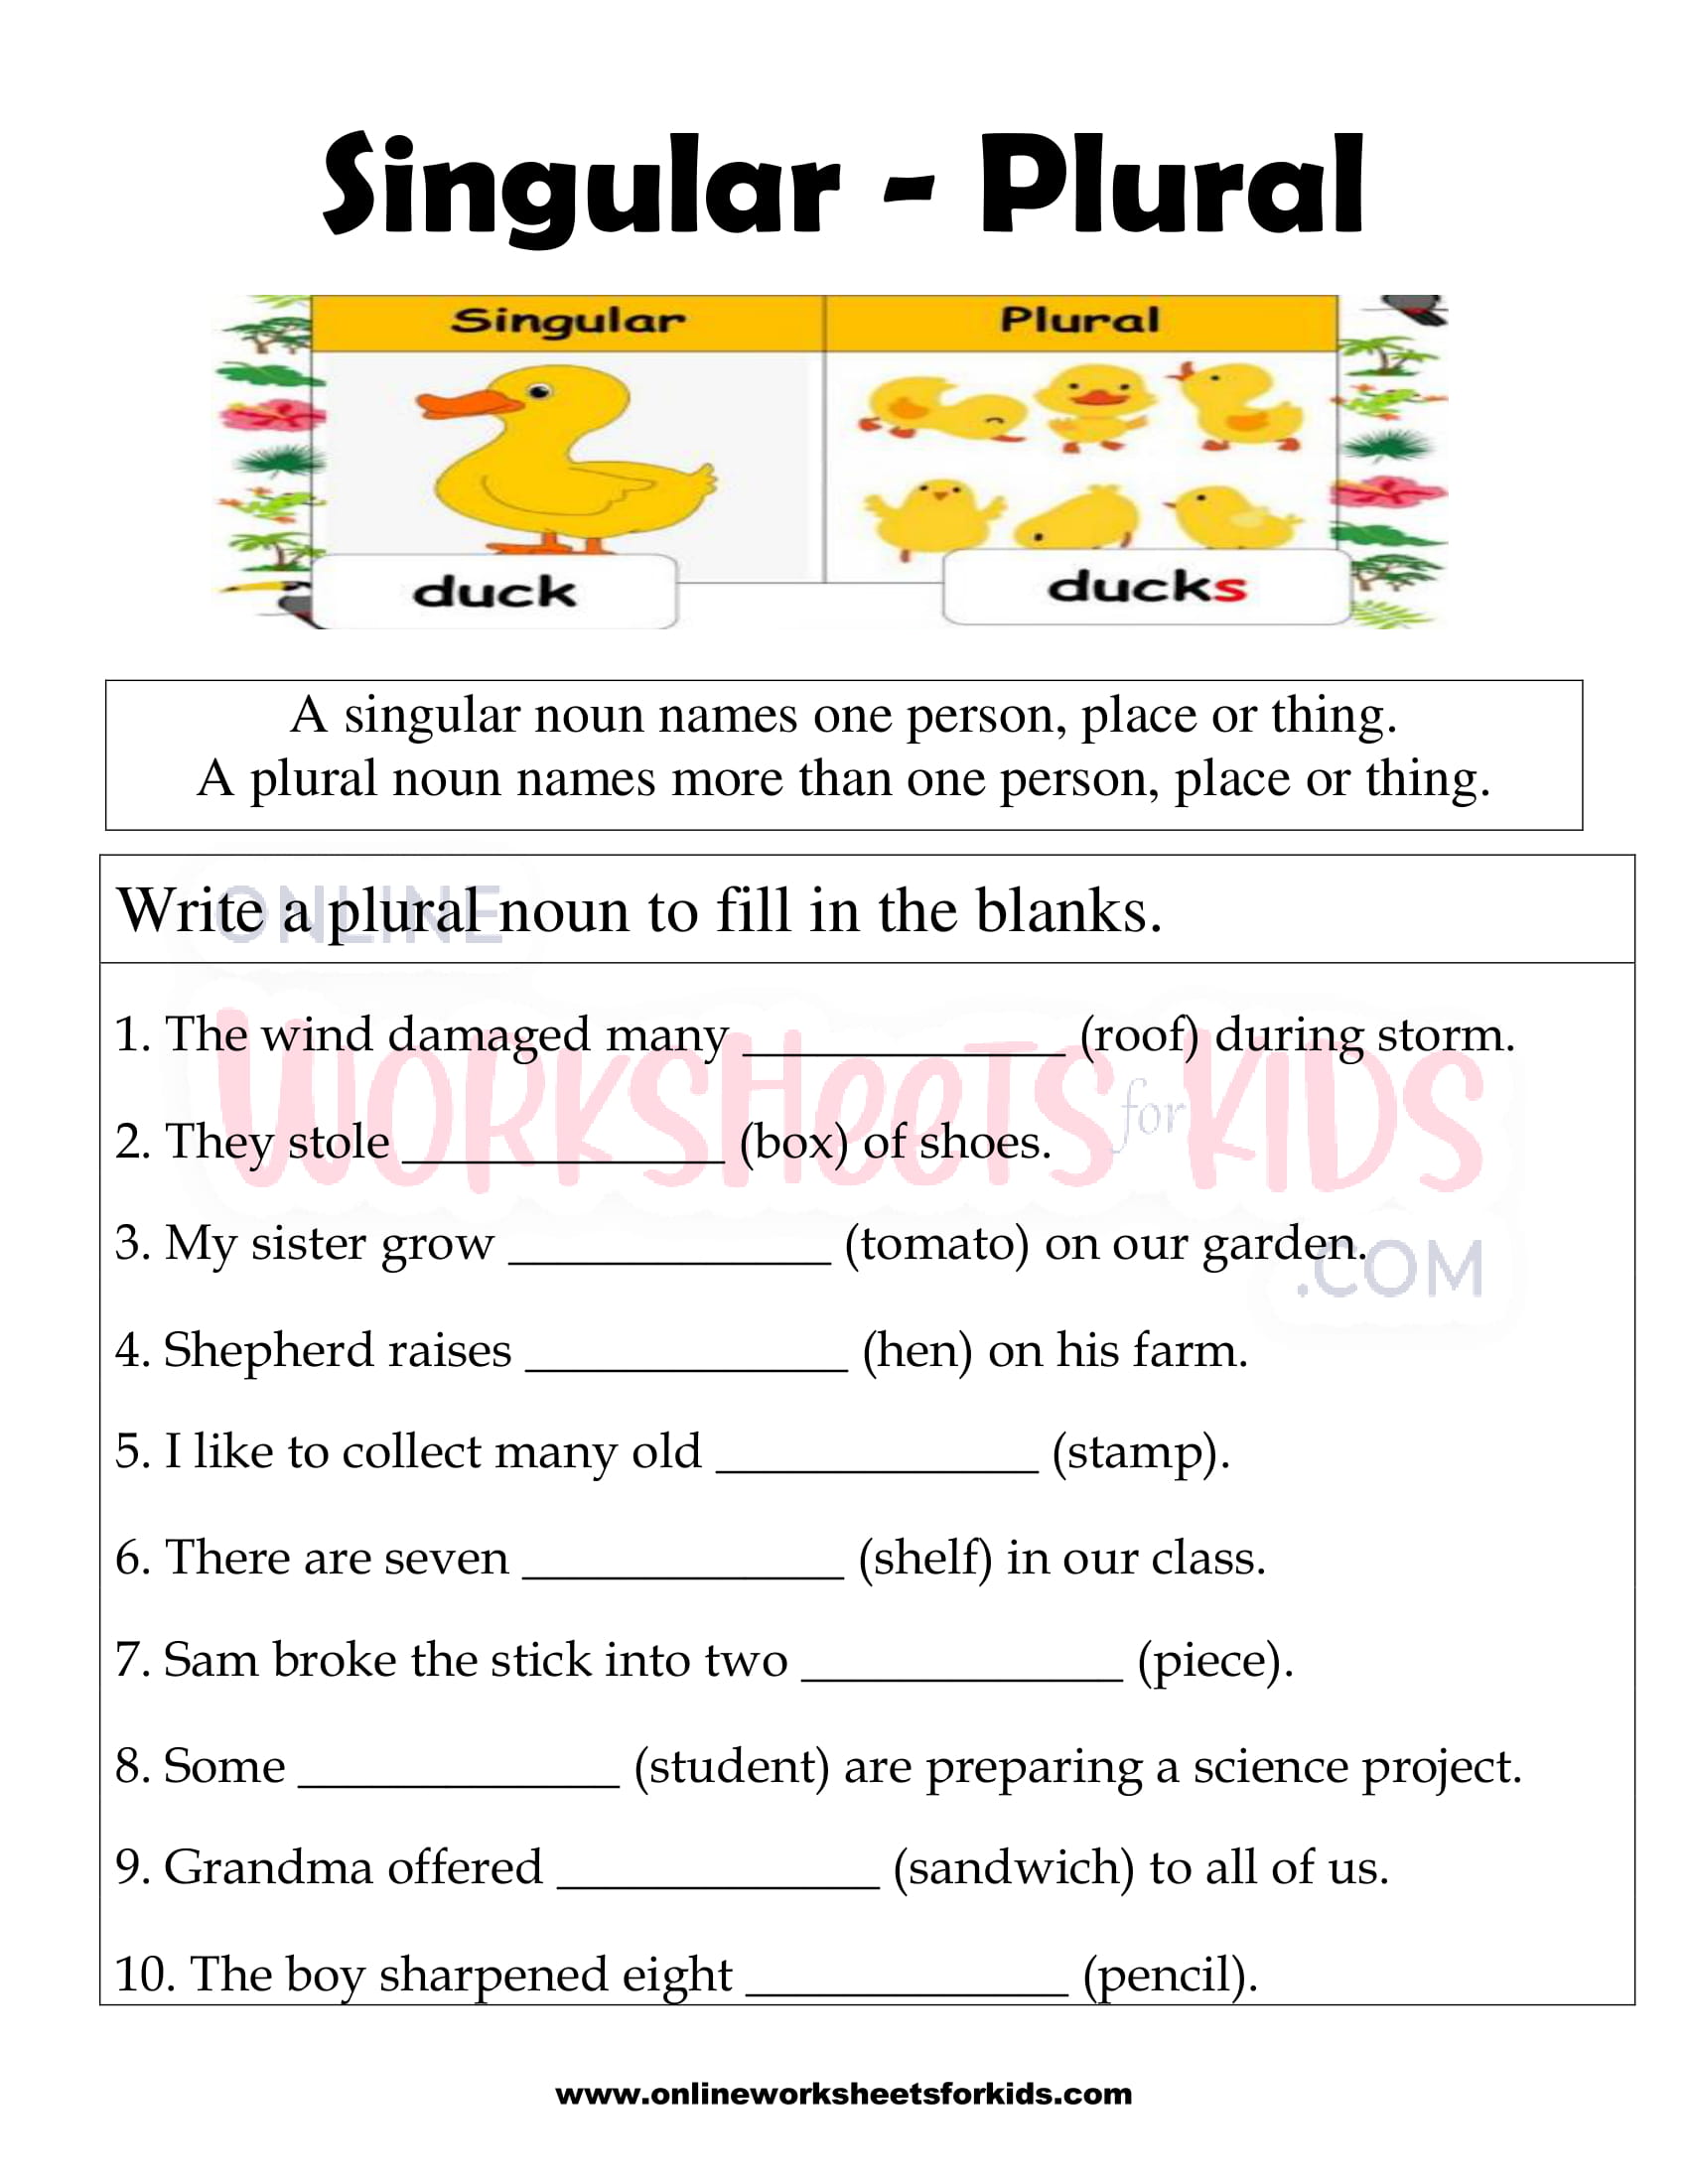 singular-and-plural-nouns-fb-worksheet-4